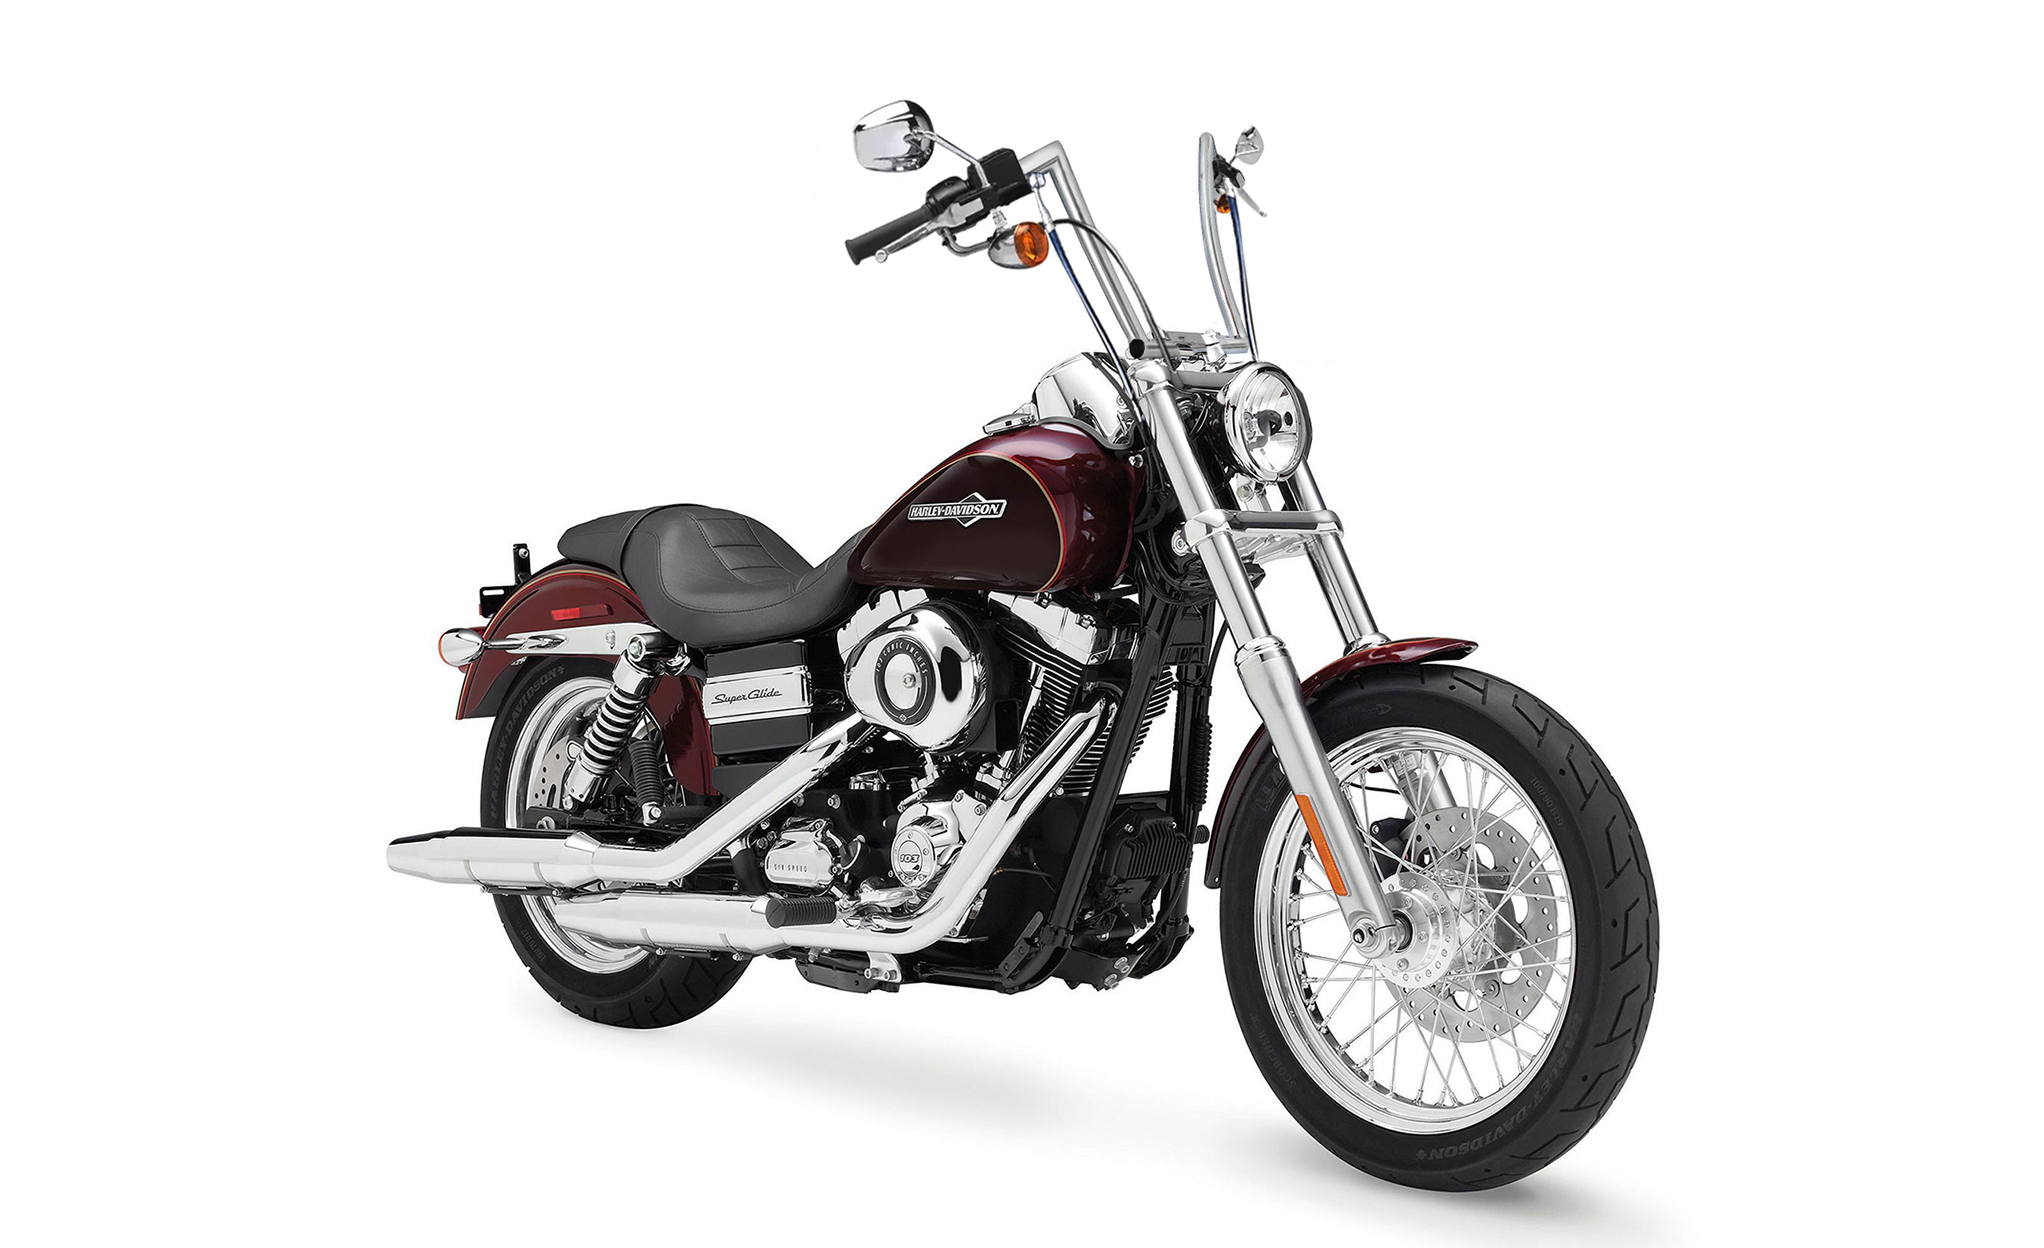 Viking Iron Born 9" Handlebar for Harley Dyna Super Glide FXD Chrome Bag on Bike View @expand